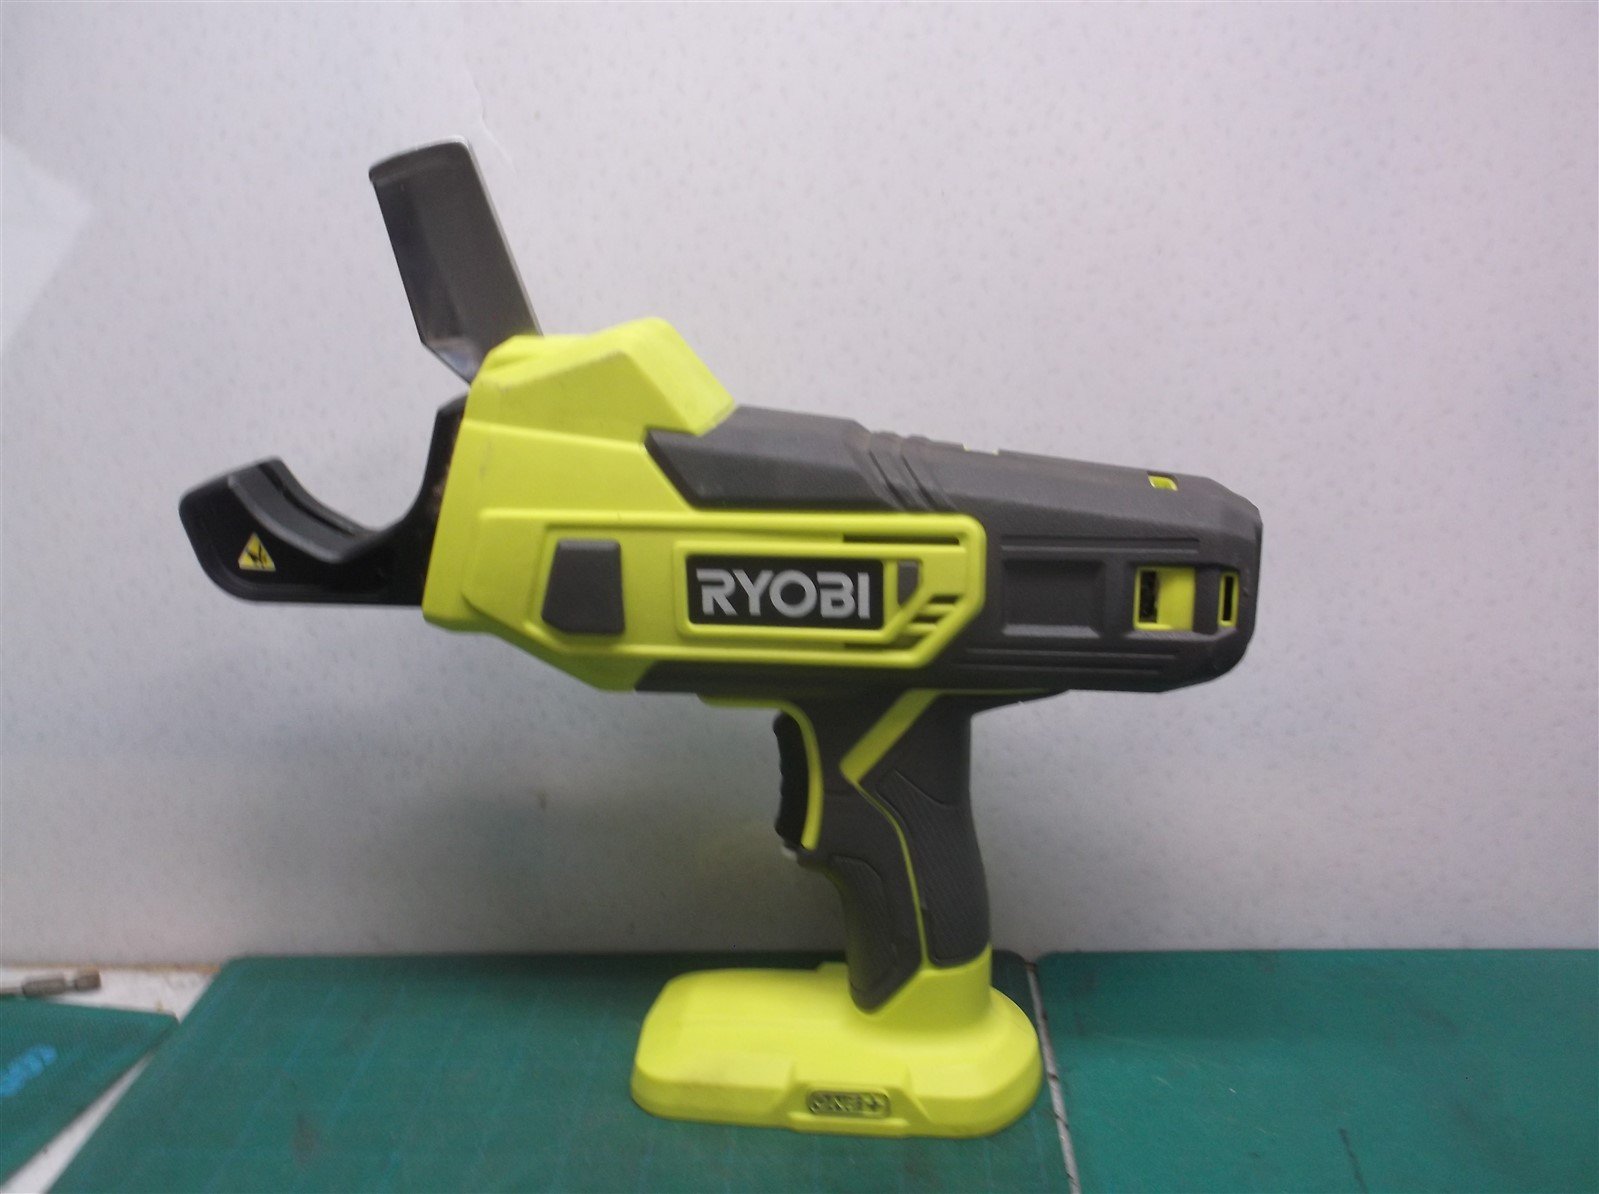 Ryobi One+ 18V 2in PVC/PEX Cutter (P593) for sale online